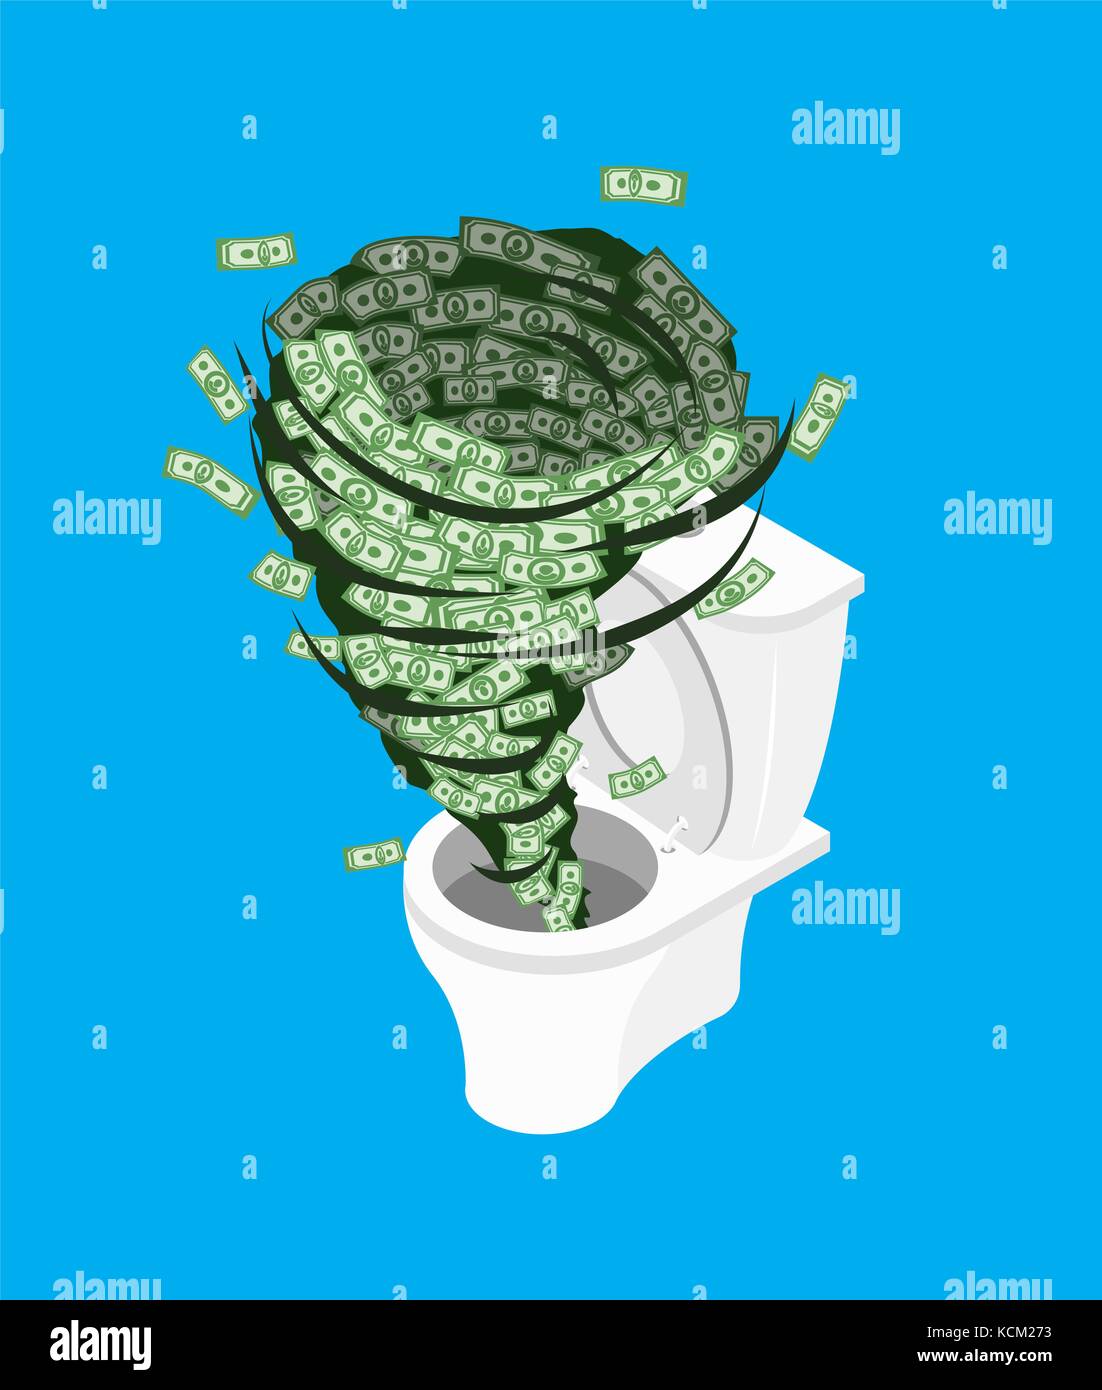 Money in toilet.. Wash off cash in wc. Vector illustration Stock Vector